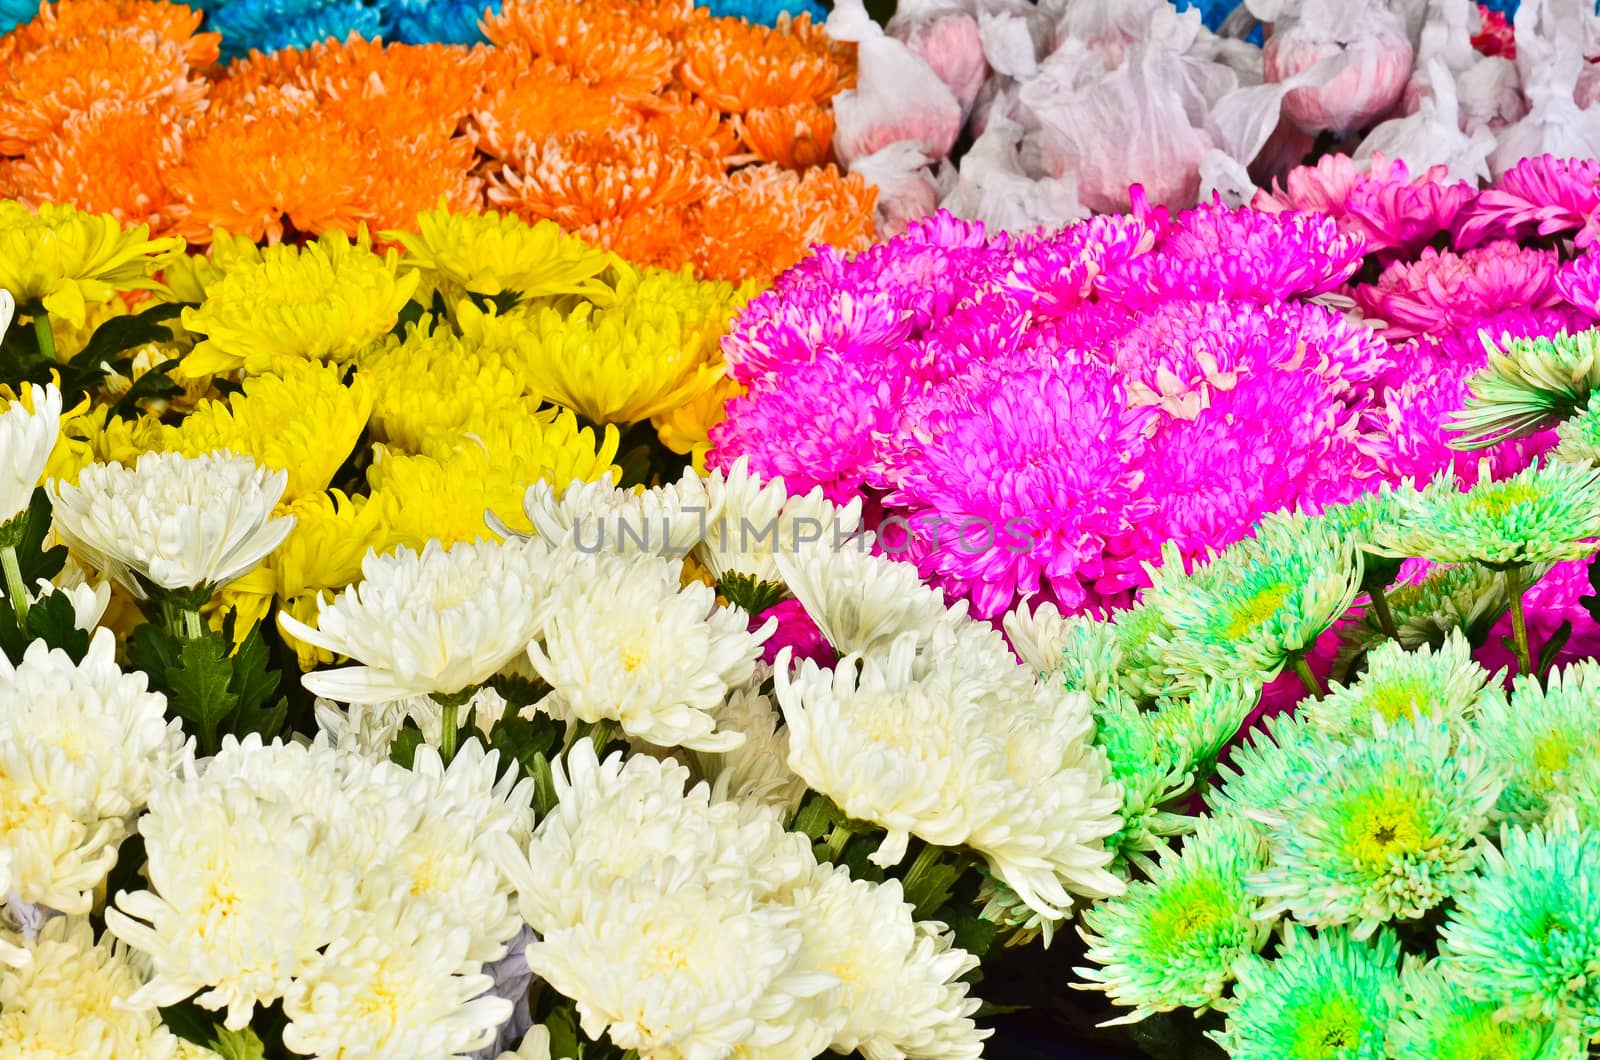 Many colorful chrysanthemum